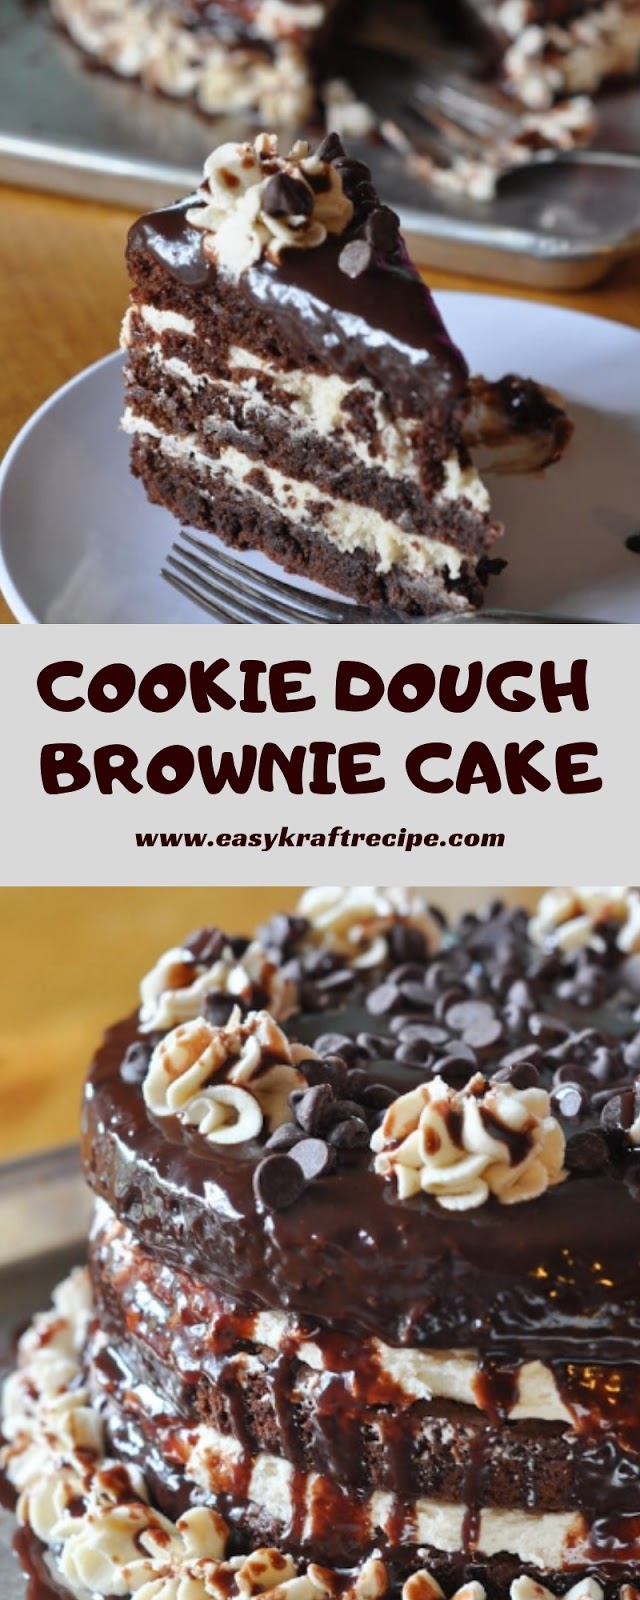 COOKIE DOUGH BROWNIE CAKE